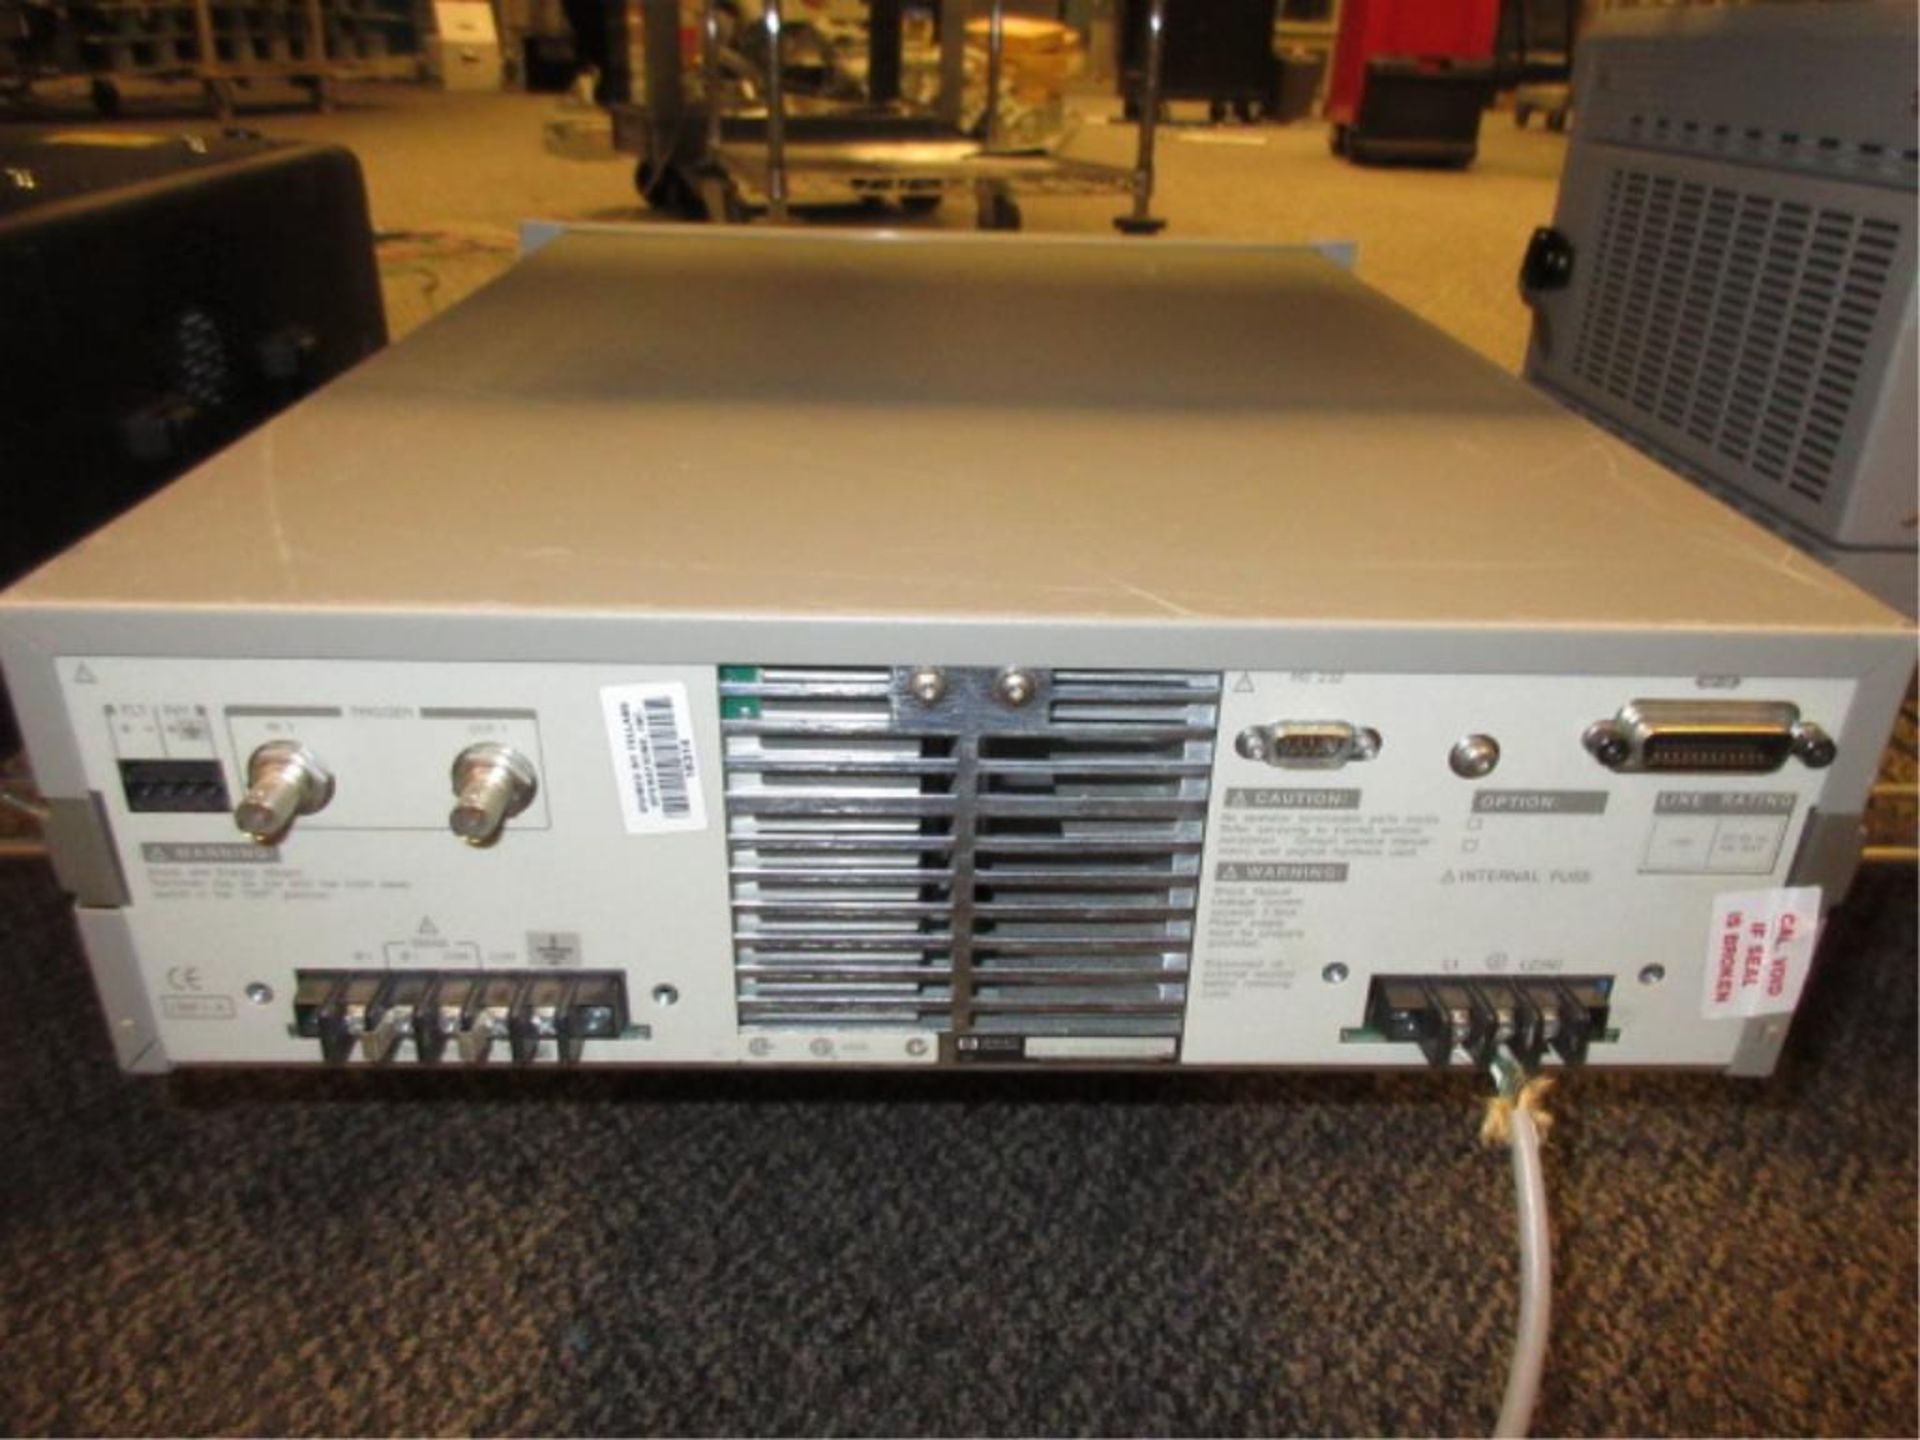 Hewlett Packard 6811B AC Power Source/Analyzer. AC Power Source/Analyzer, 300Vrms, 375VA, 120v. - Image 3 of 3